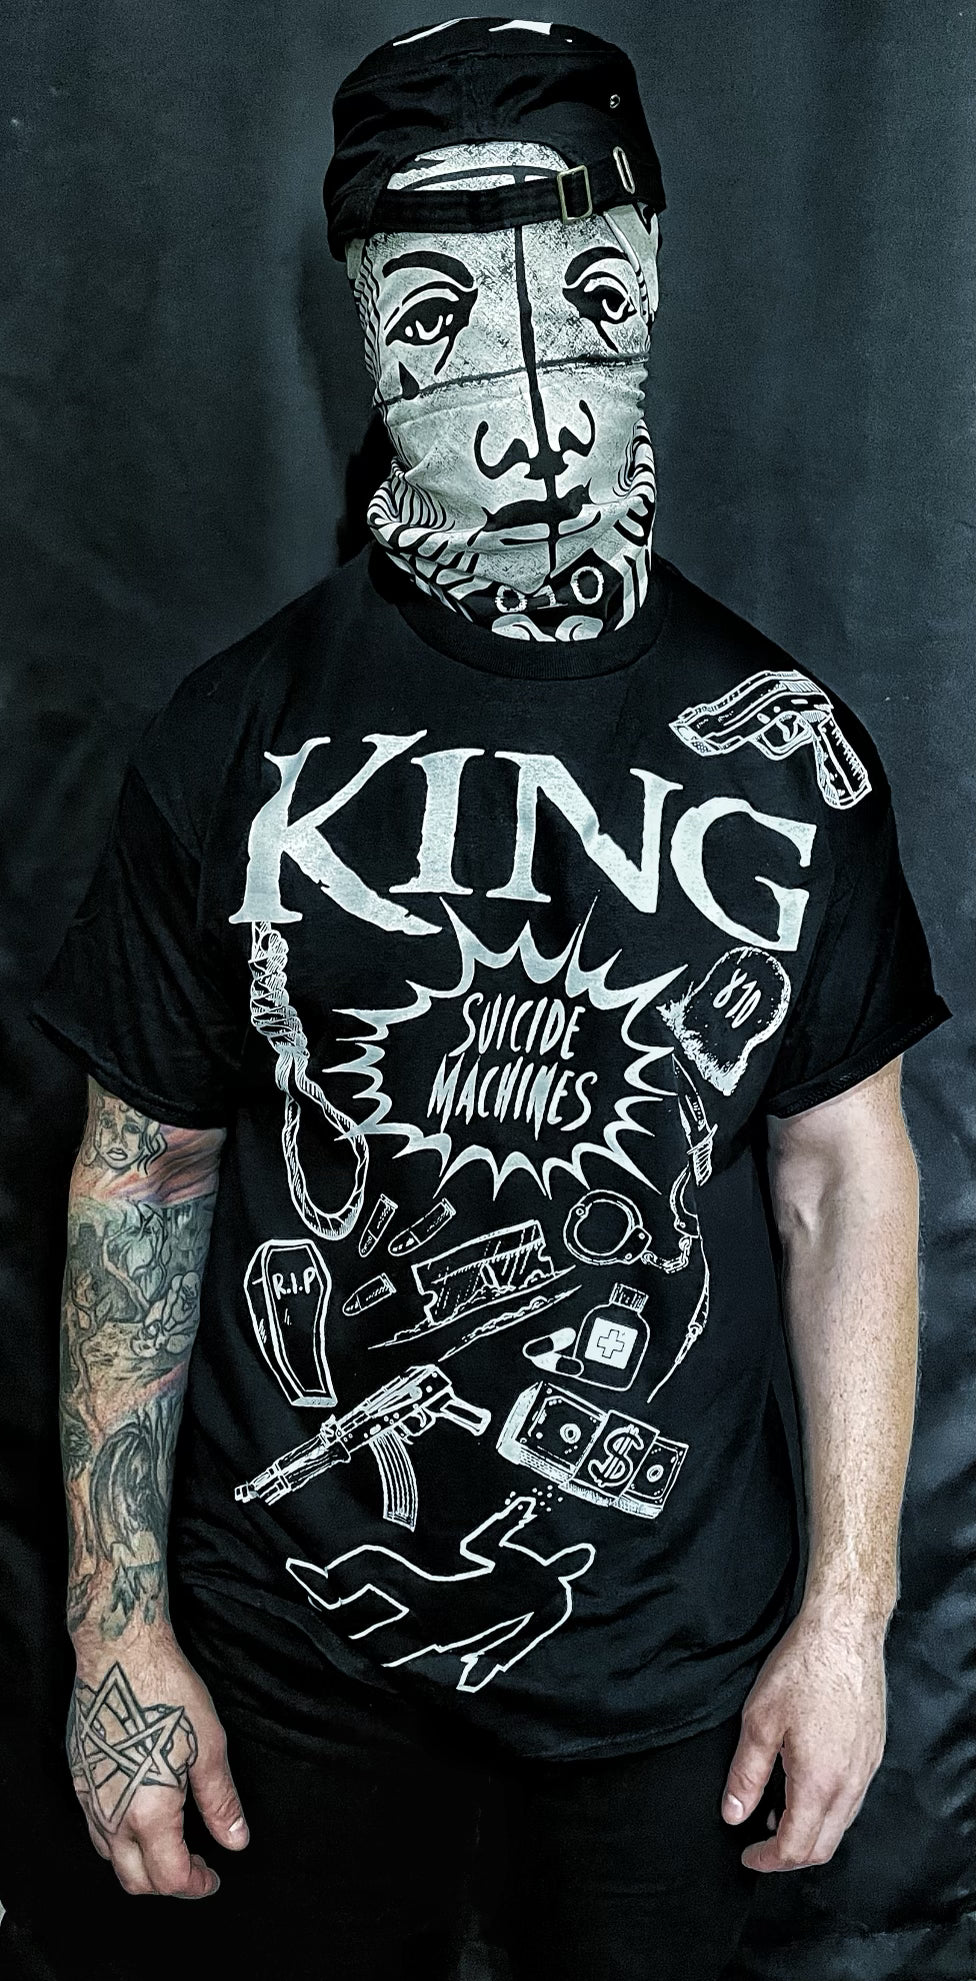 KING 810 - suicide machines T shirt